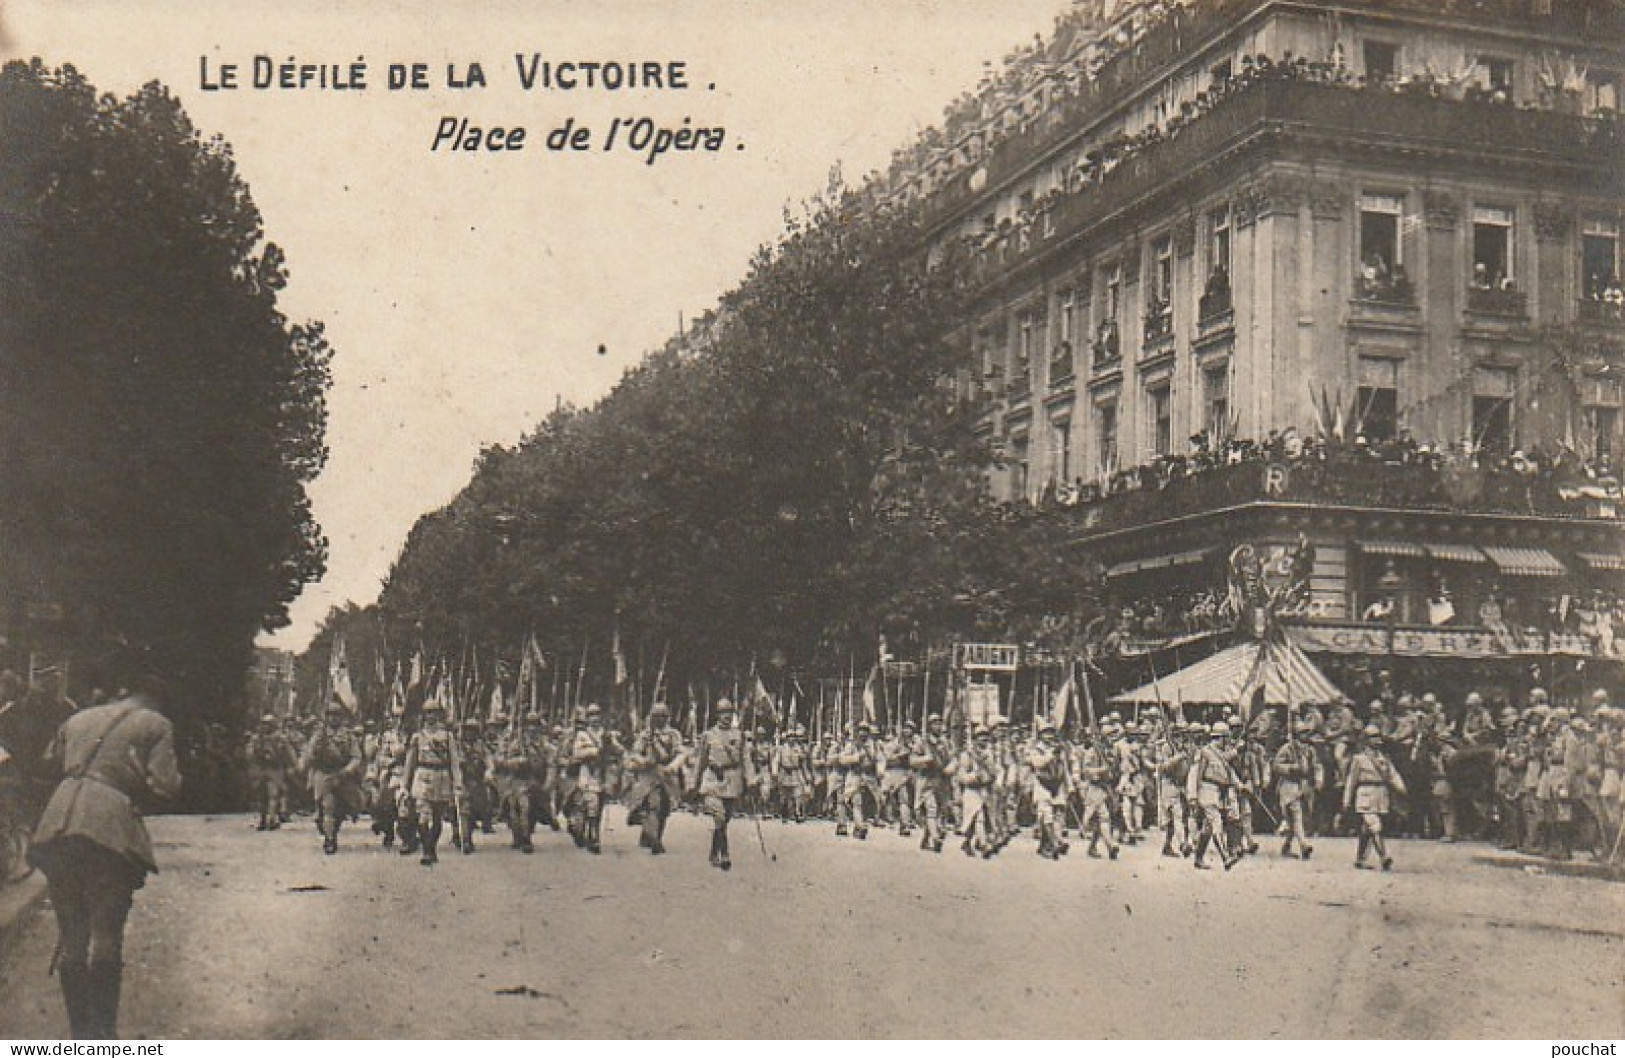 JA 2 - (75) PARIS - LE DEFILE DE LA VICTOIRE (1919) - PLACE DE L'OPERA - 2 SCANS - Lotes Y Colecciones